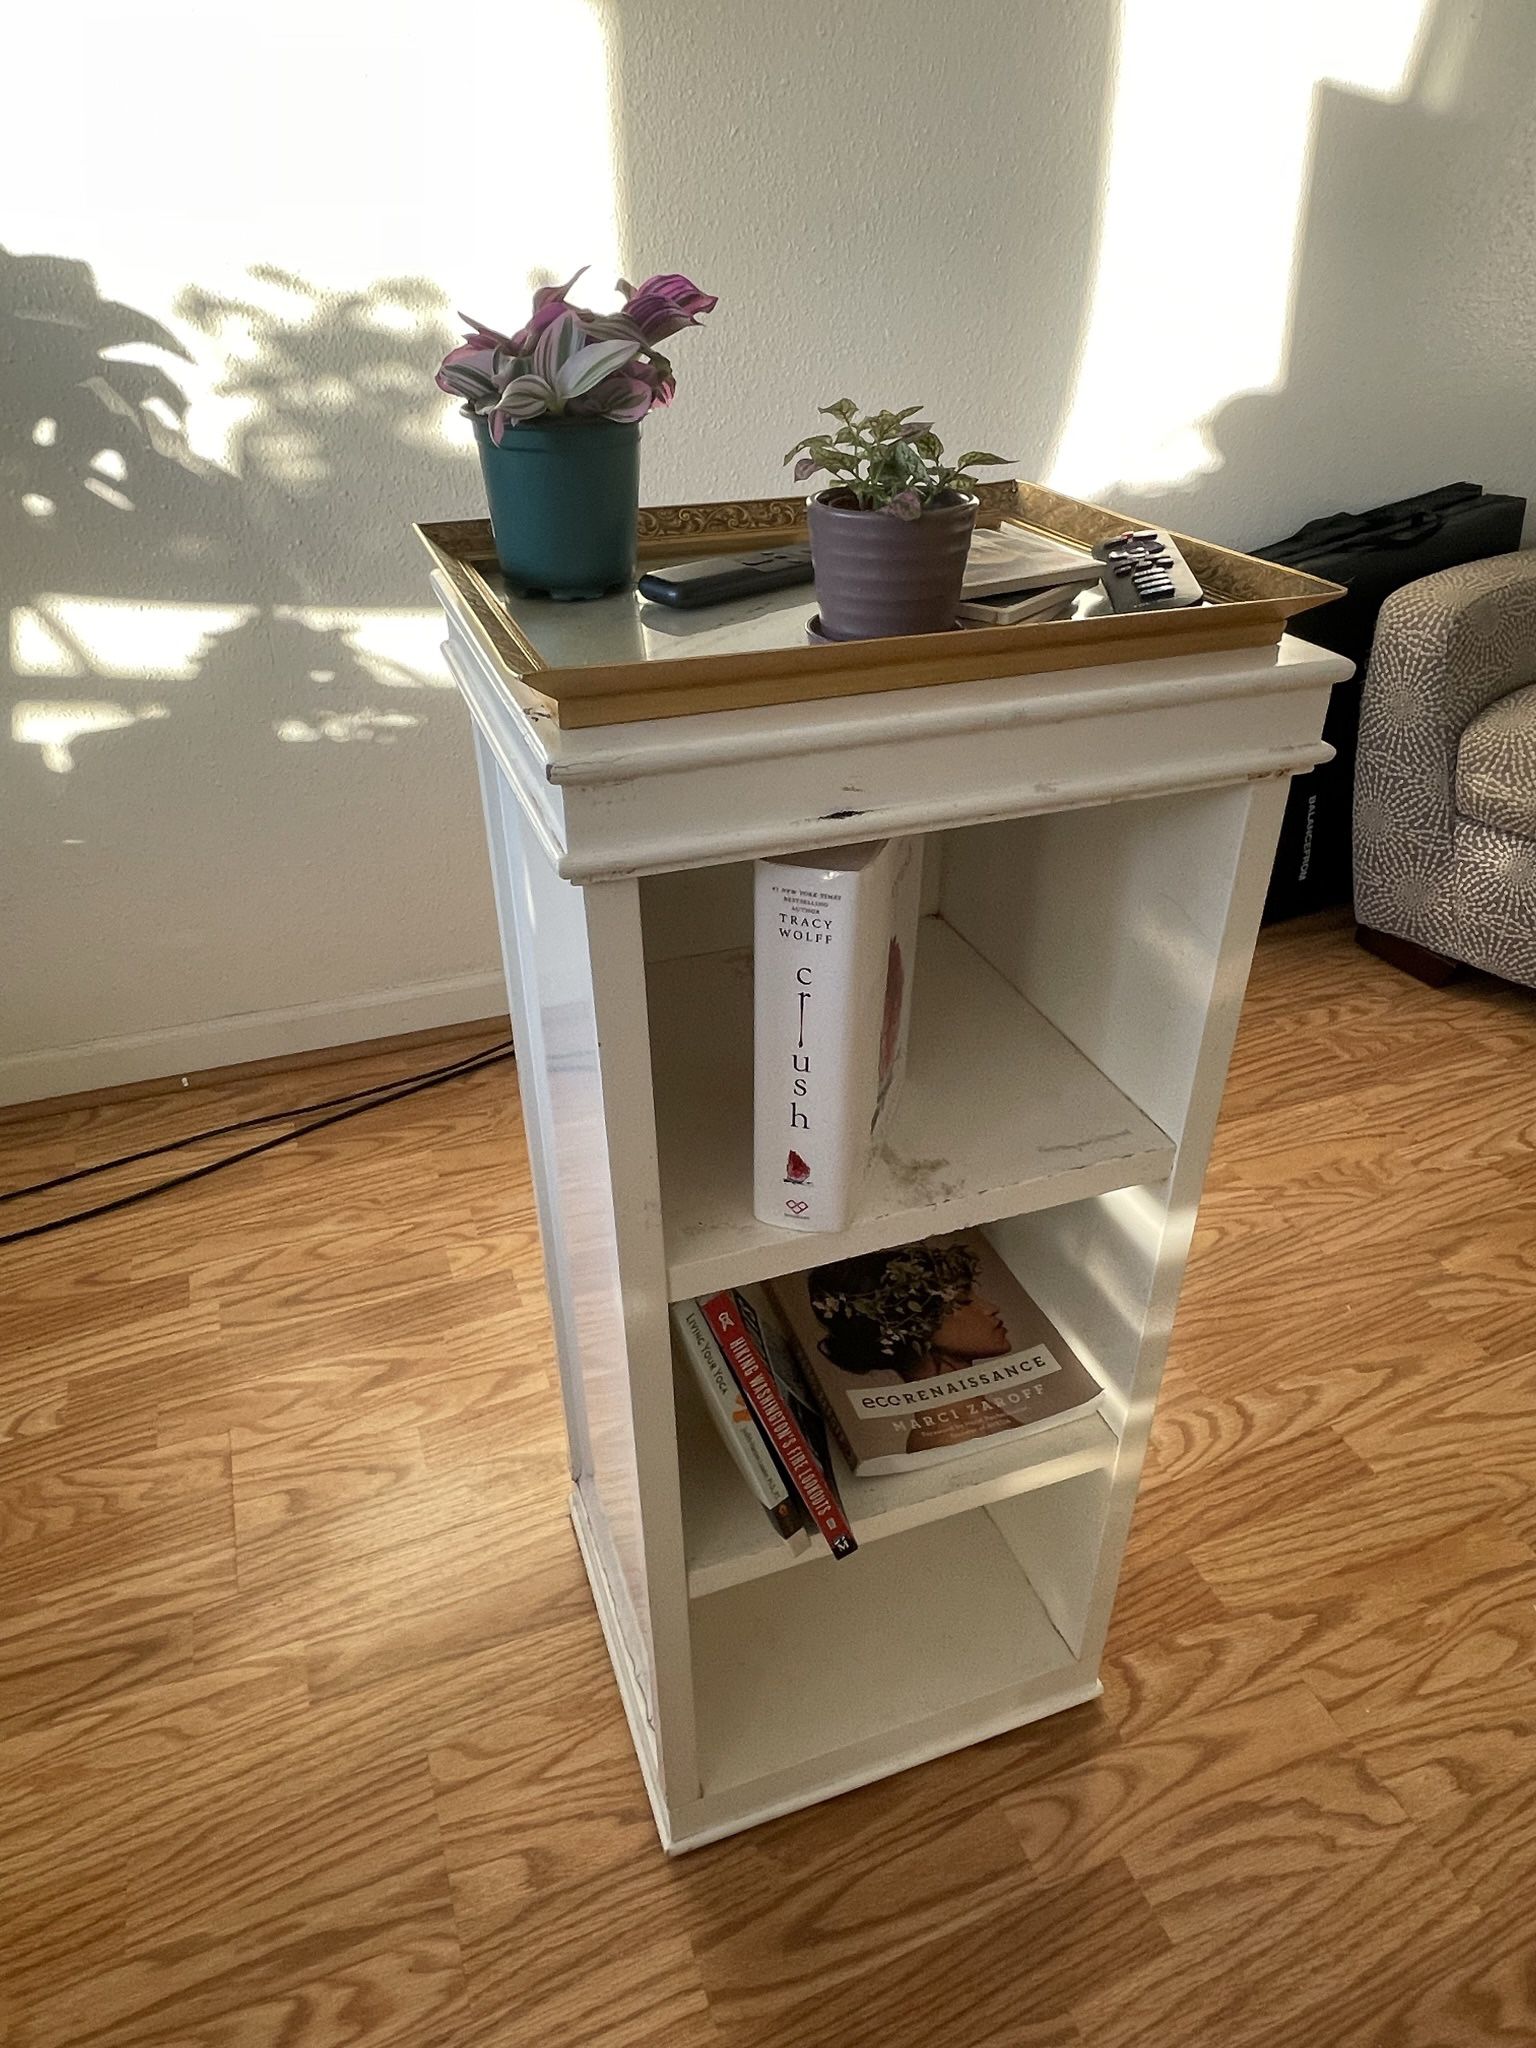 SOLID white Bookshelf Cabinet. 